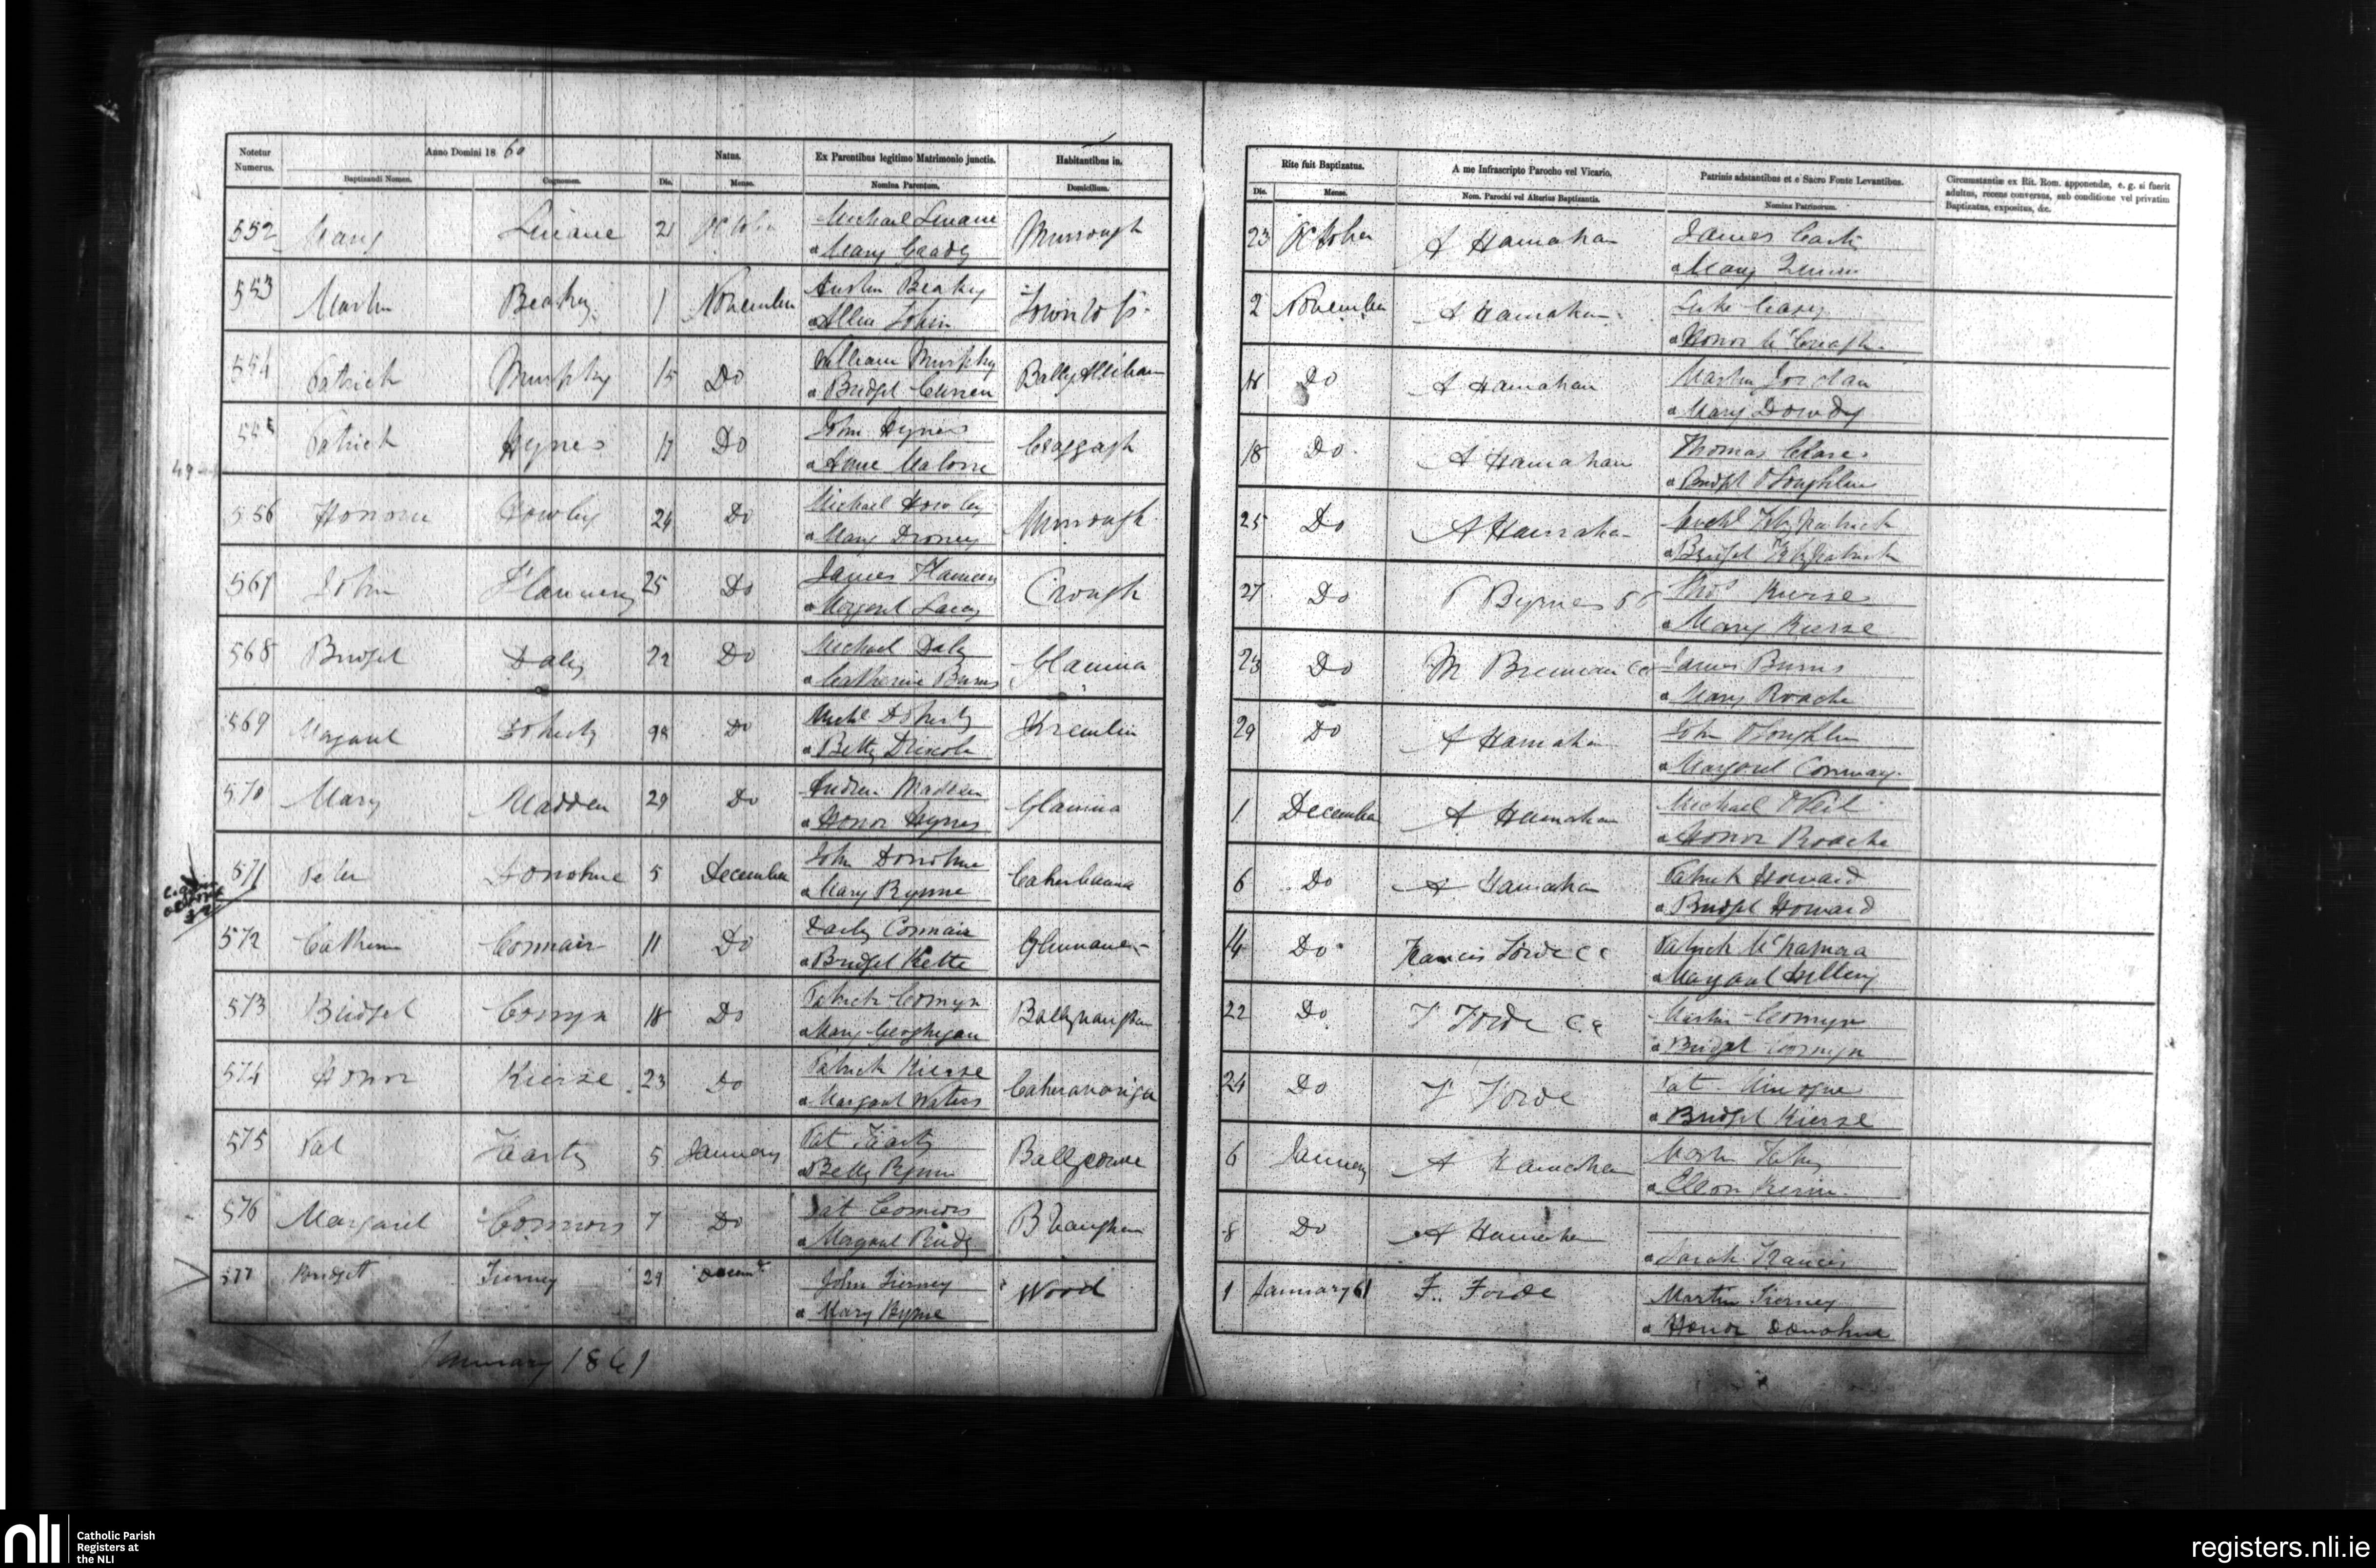 Kierce Honora - Baptism Record 24 Dec 1860 (County Clare) (written as Honor) (upl).jpg